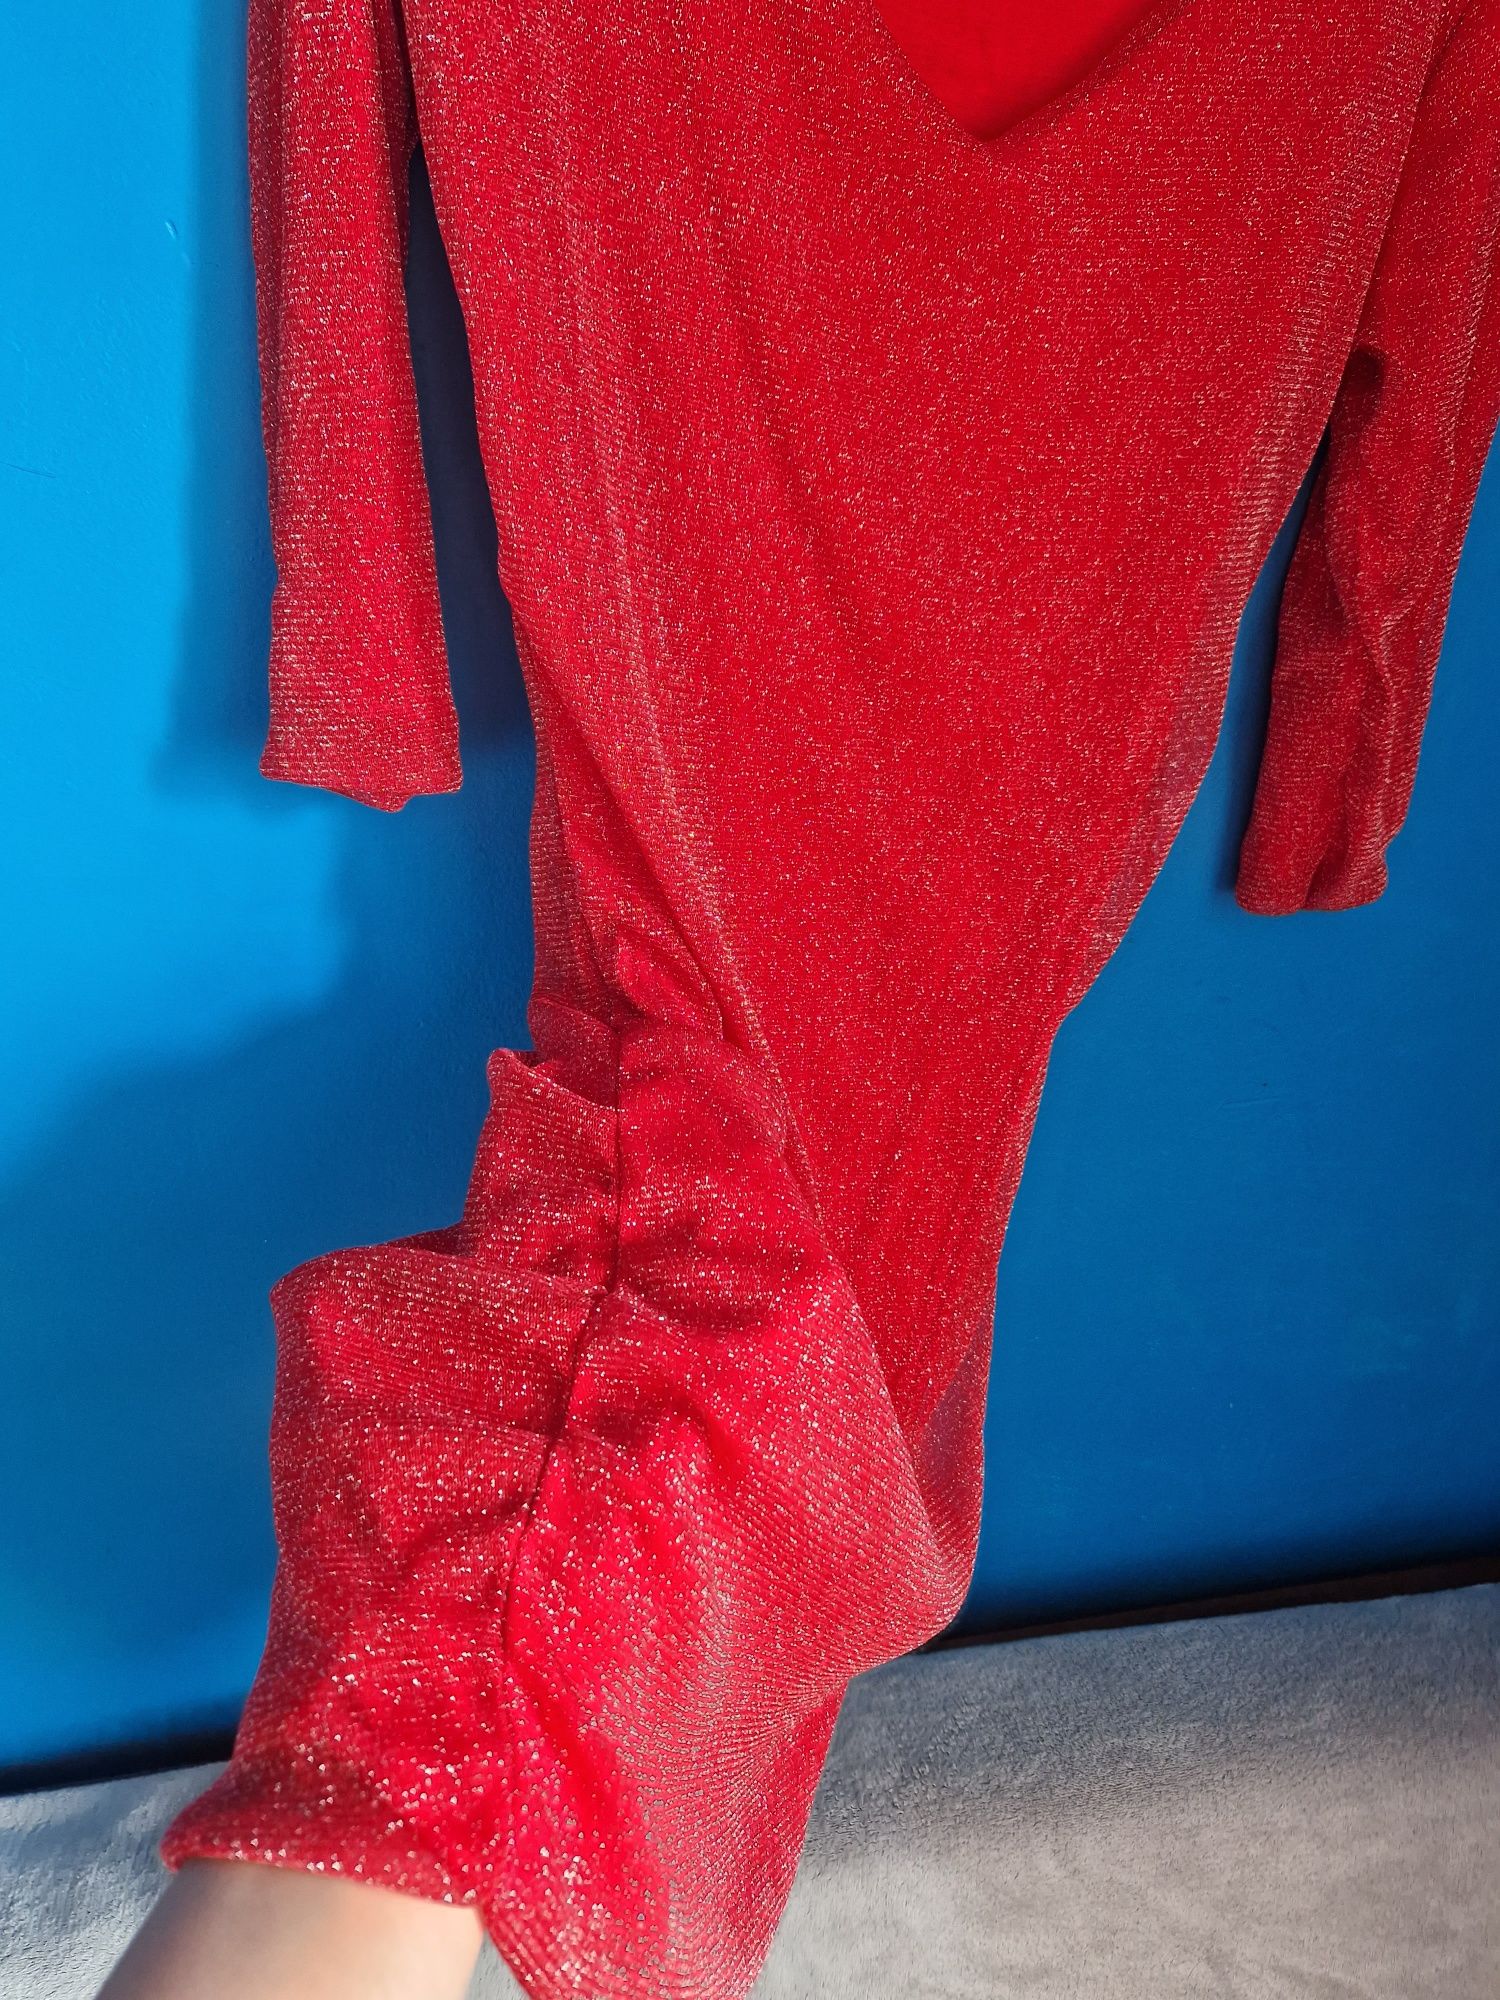 Червена рокля със сребристи нишки